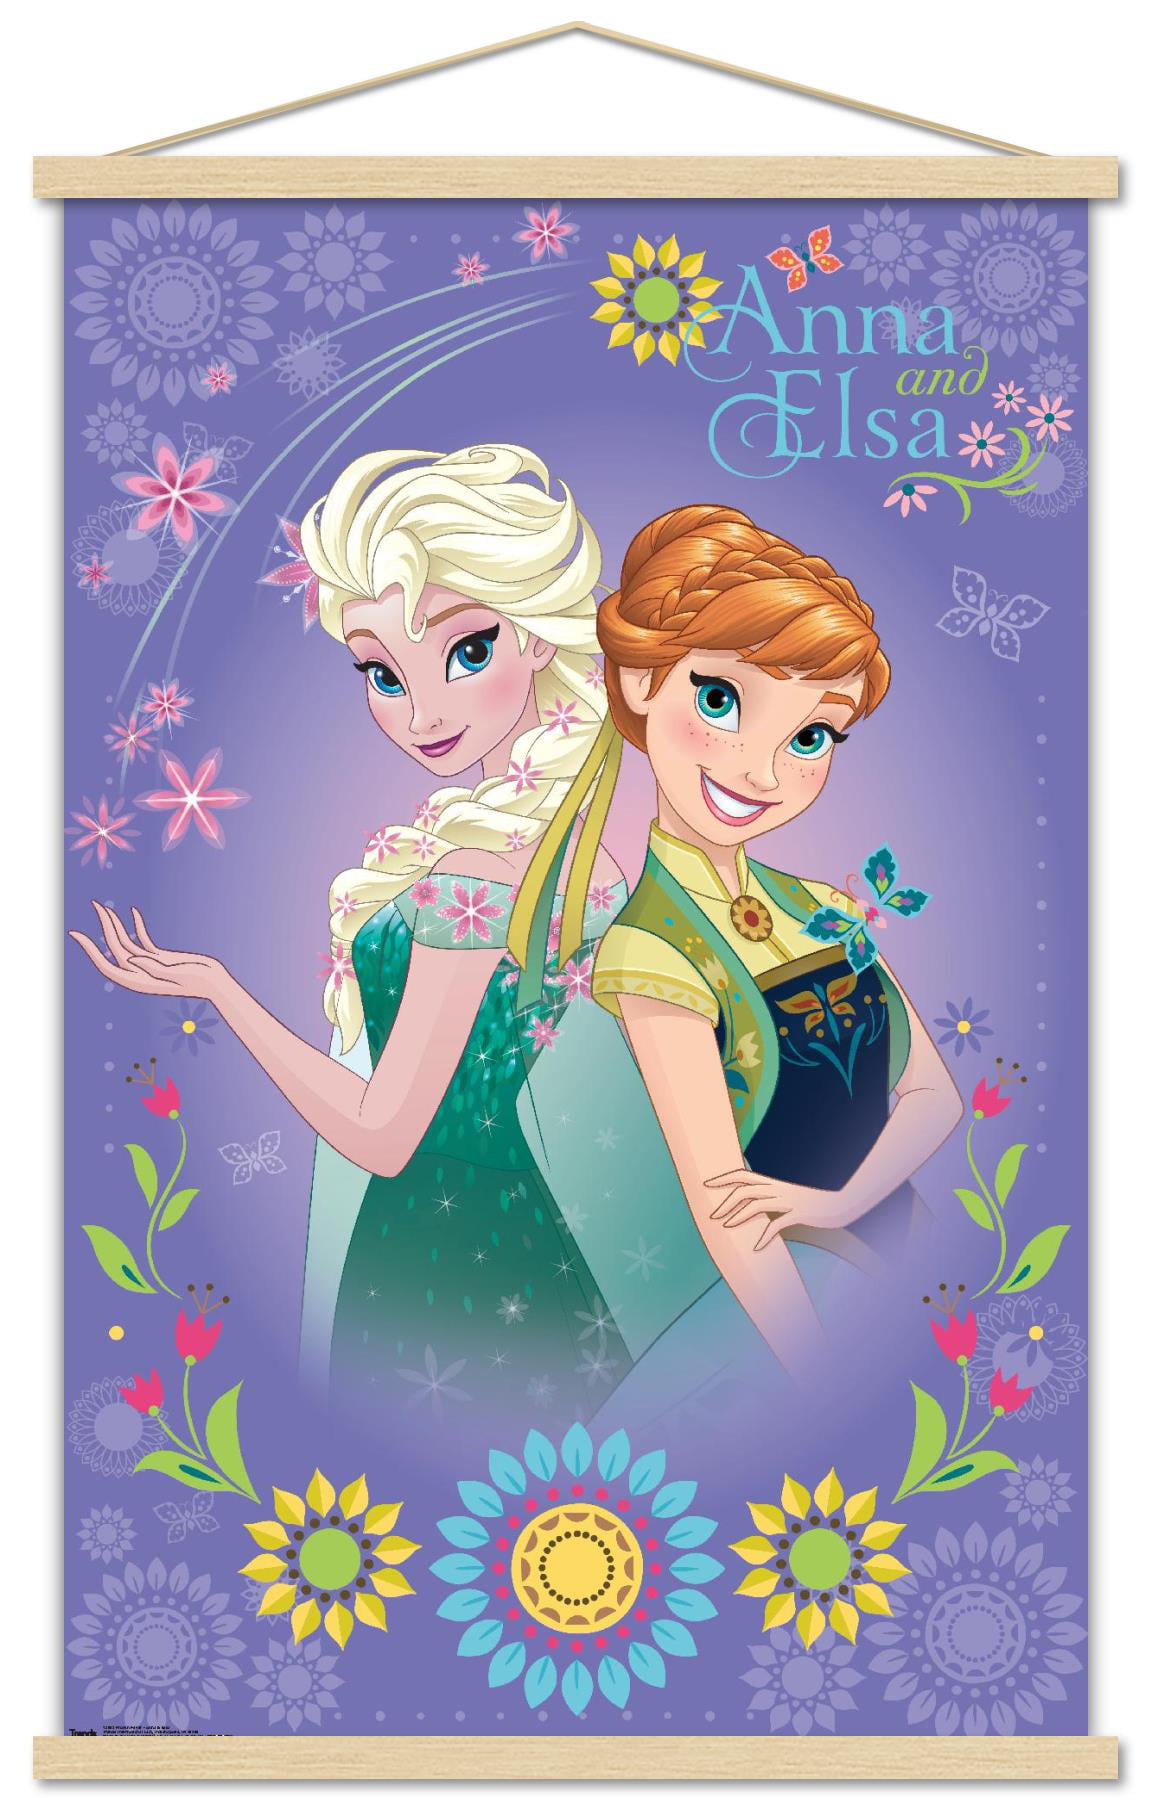 Disney Frozen Fever - Anna and Elsa Wall Poster, 22.375 x 34 